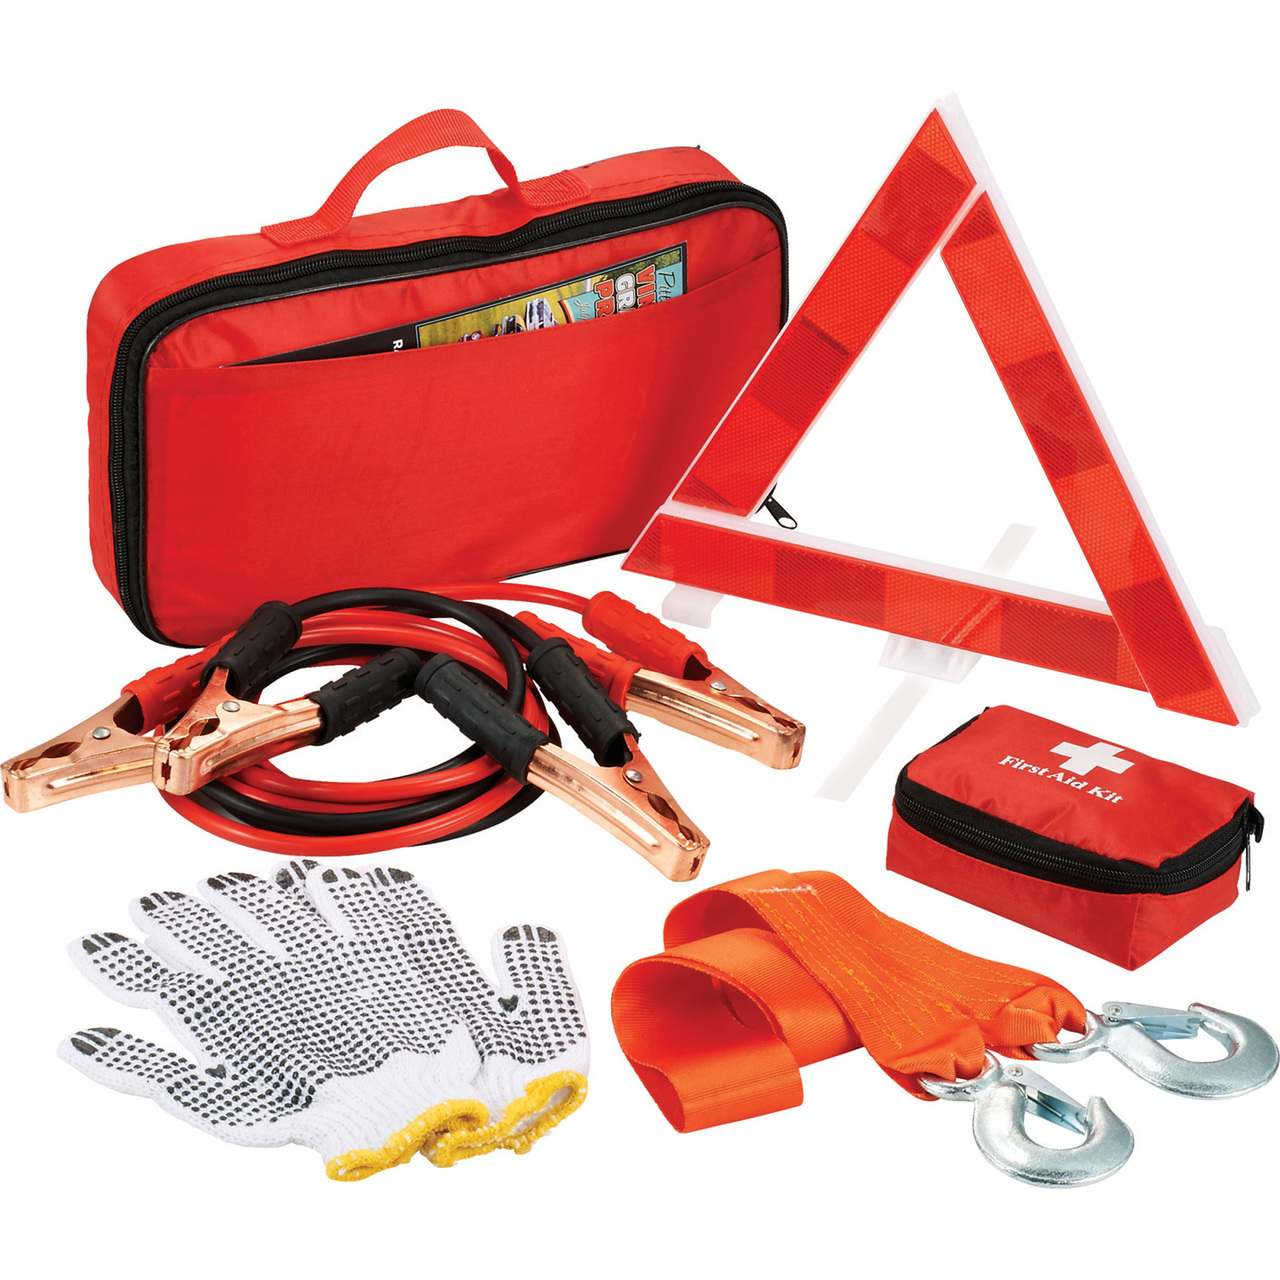 Car Emergency Kit Item #1: HIGHWAY EMERGENCY FIRST AID KIT